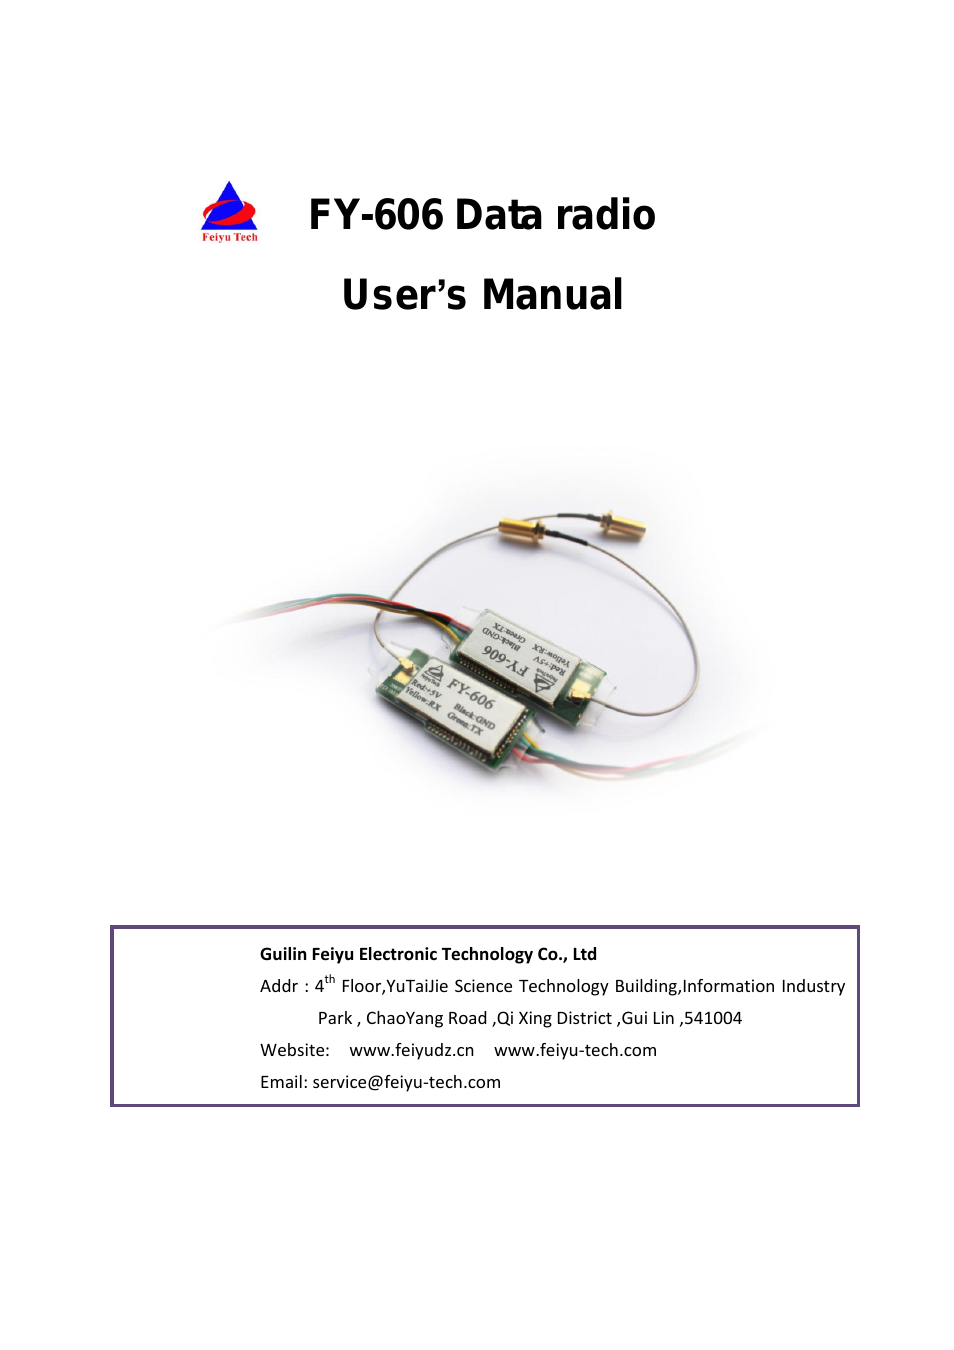 FY-606 Data Radio